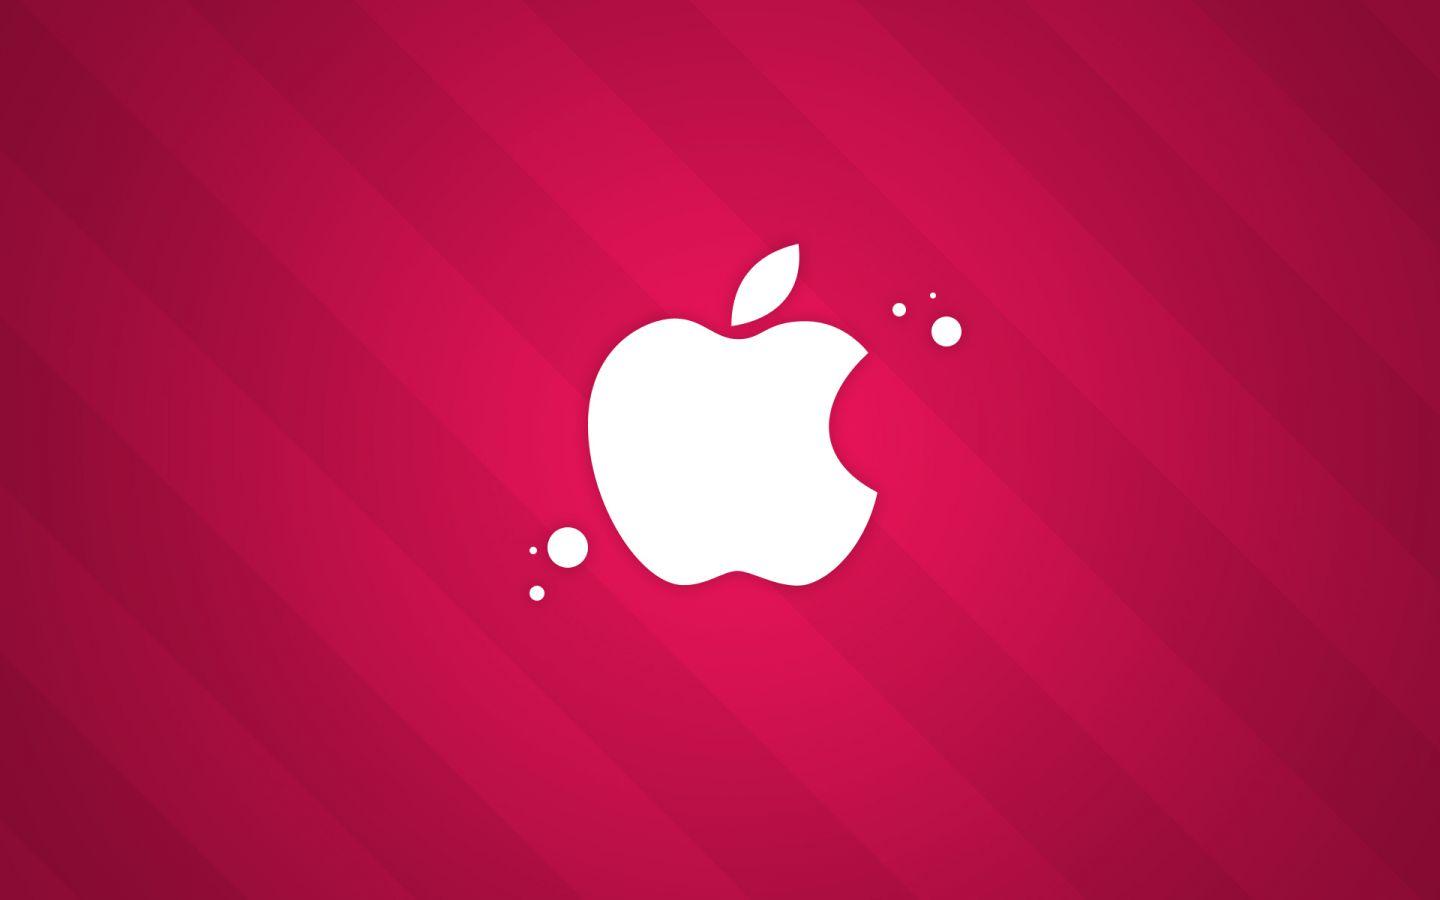 Red apple wallpaper [ apple logo ] mac men magazine